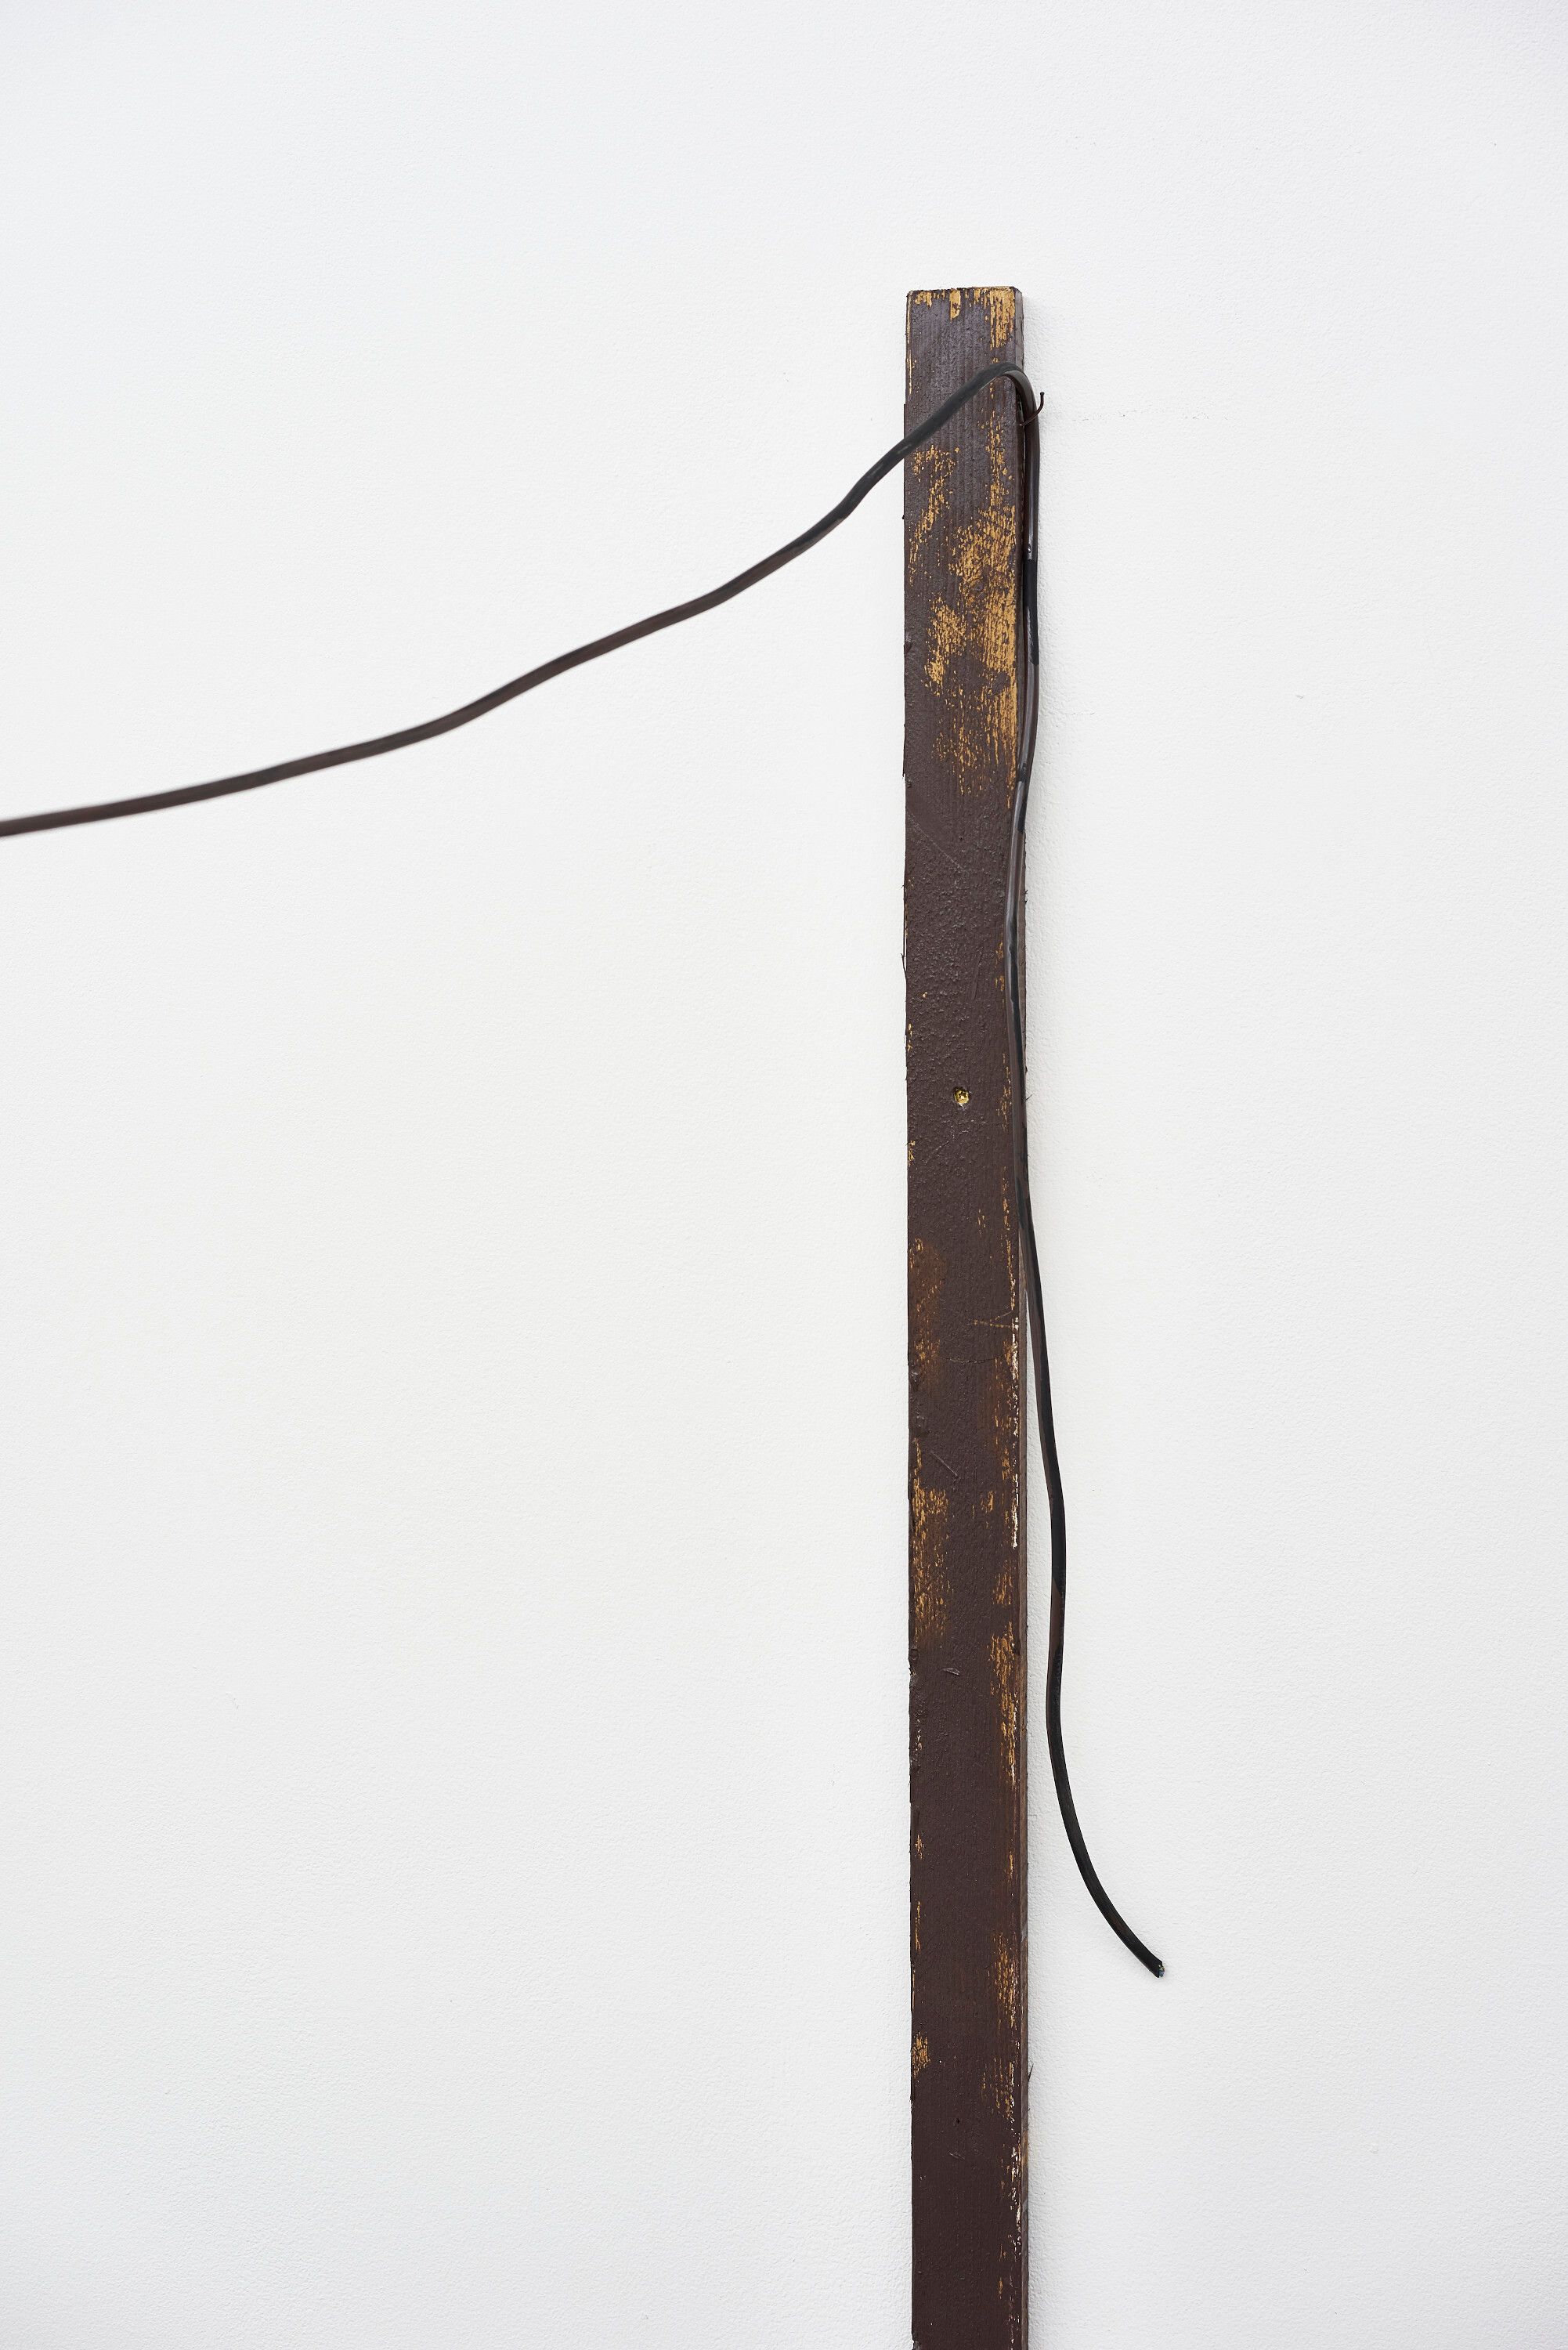 Gerry Bibby and Henrik Olesen, Power Line (detail), 2016, Wood, paint, cable, 250 ⁠× ⁠140 ⁠× ⁠357 ⁠⁠cm